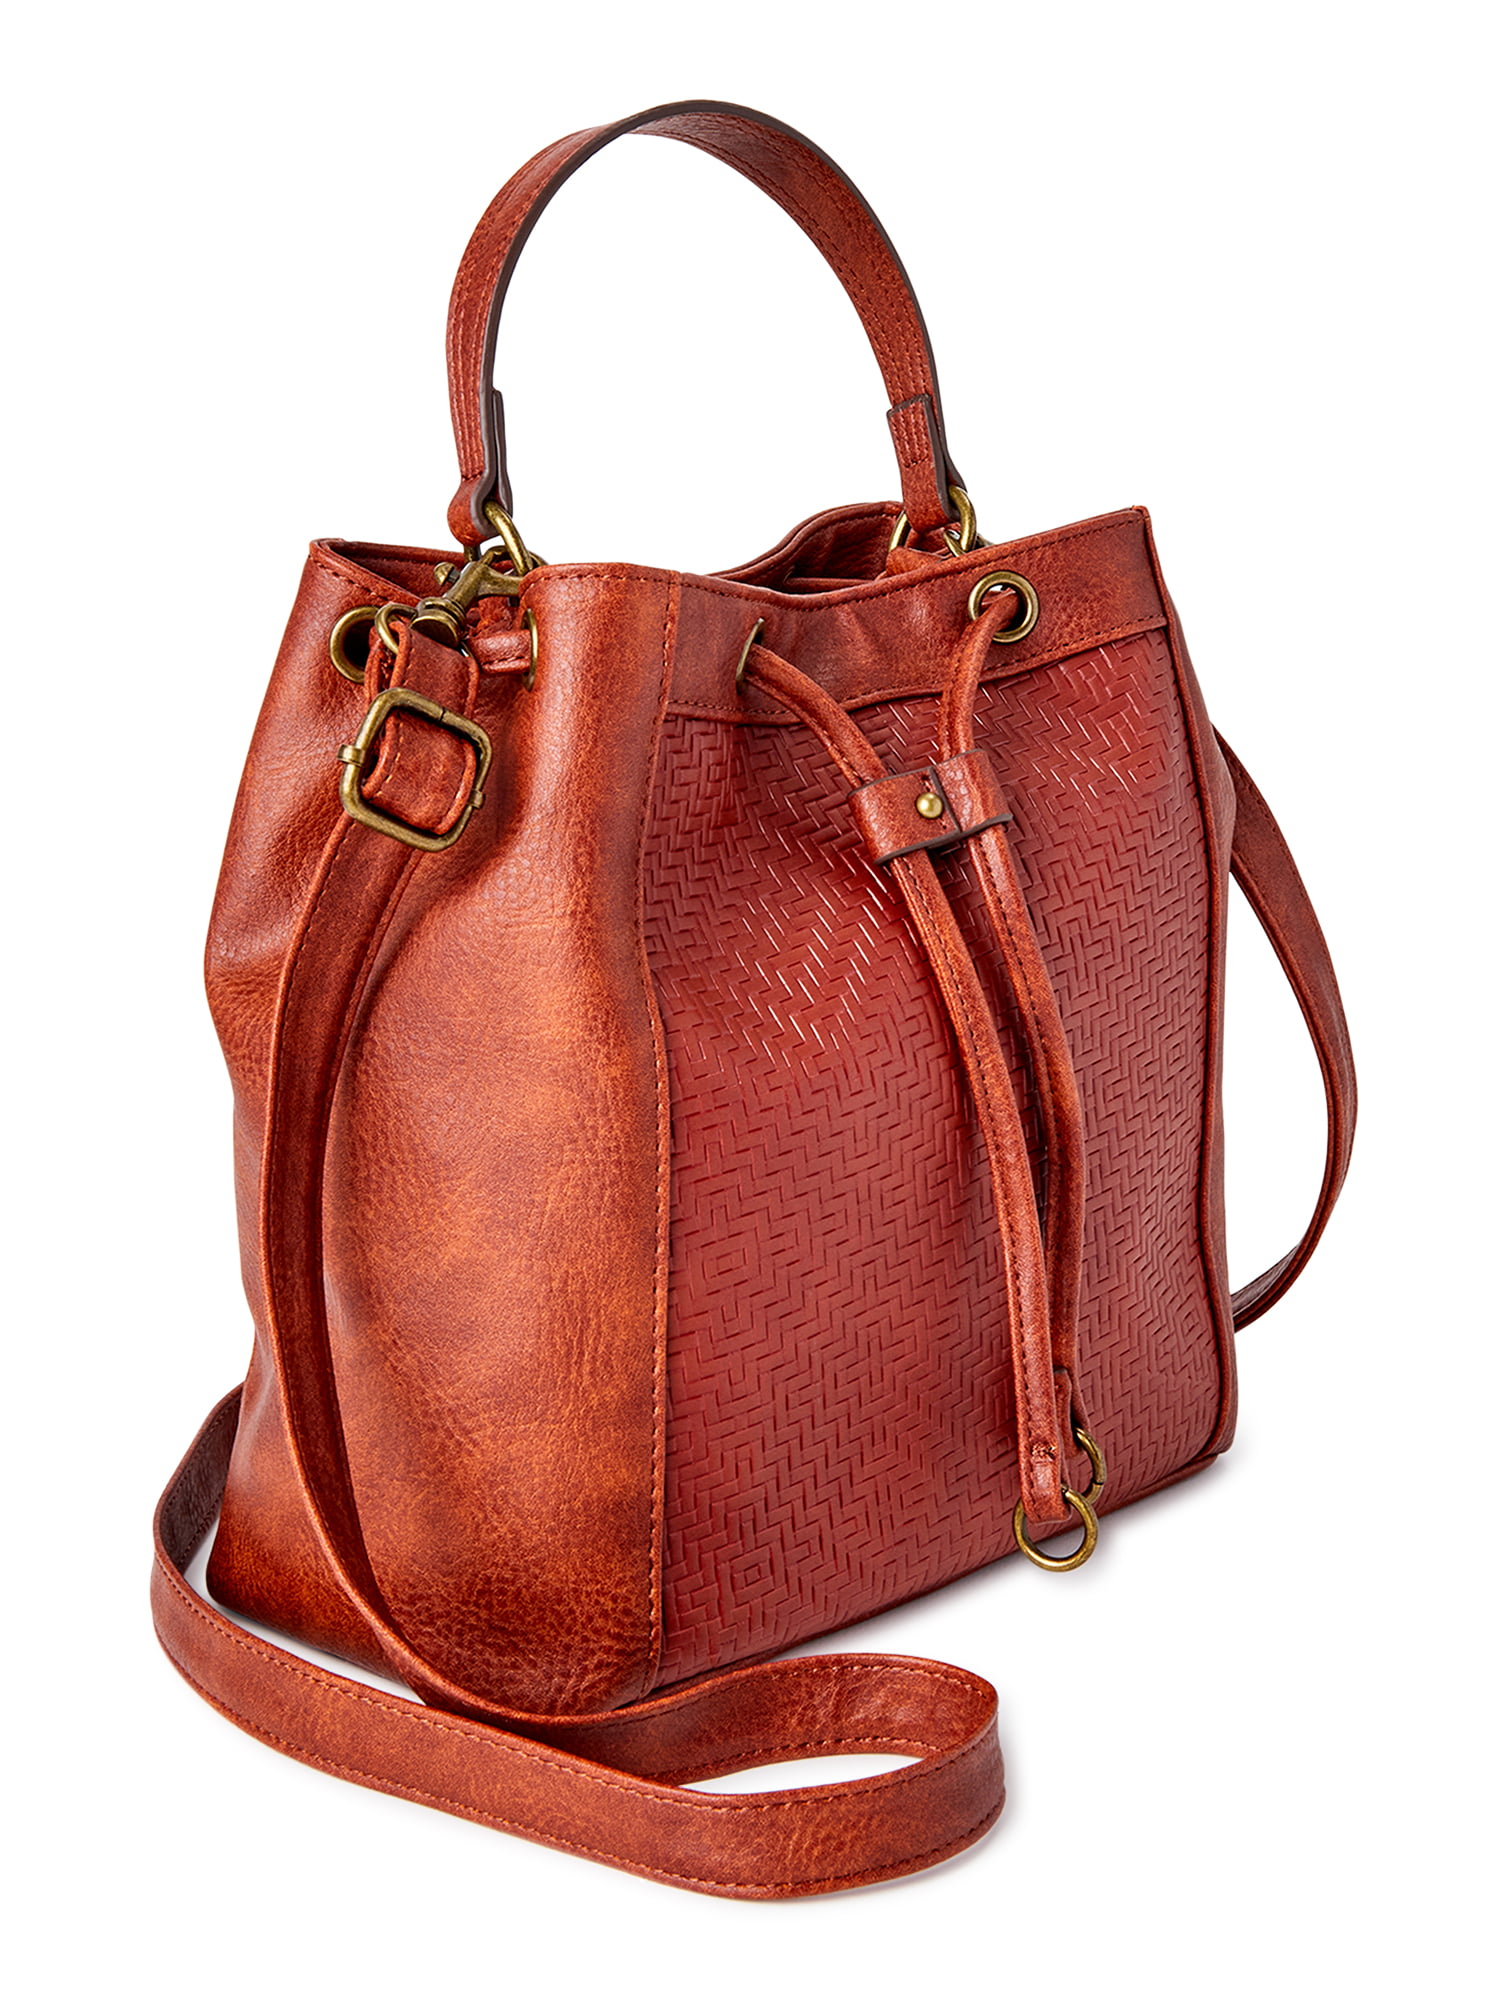 🇲🇾 DESINCE Women Handbag Tote Bag Beg Perempuan Sling Bag Bucket